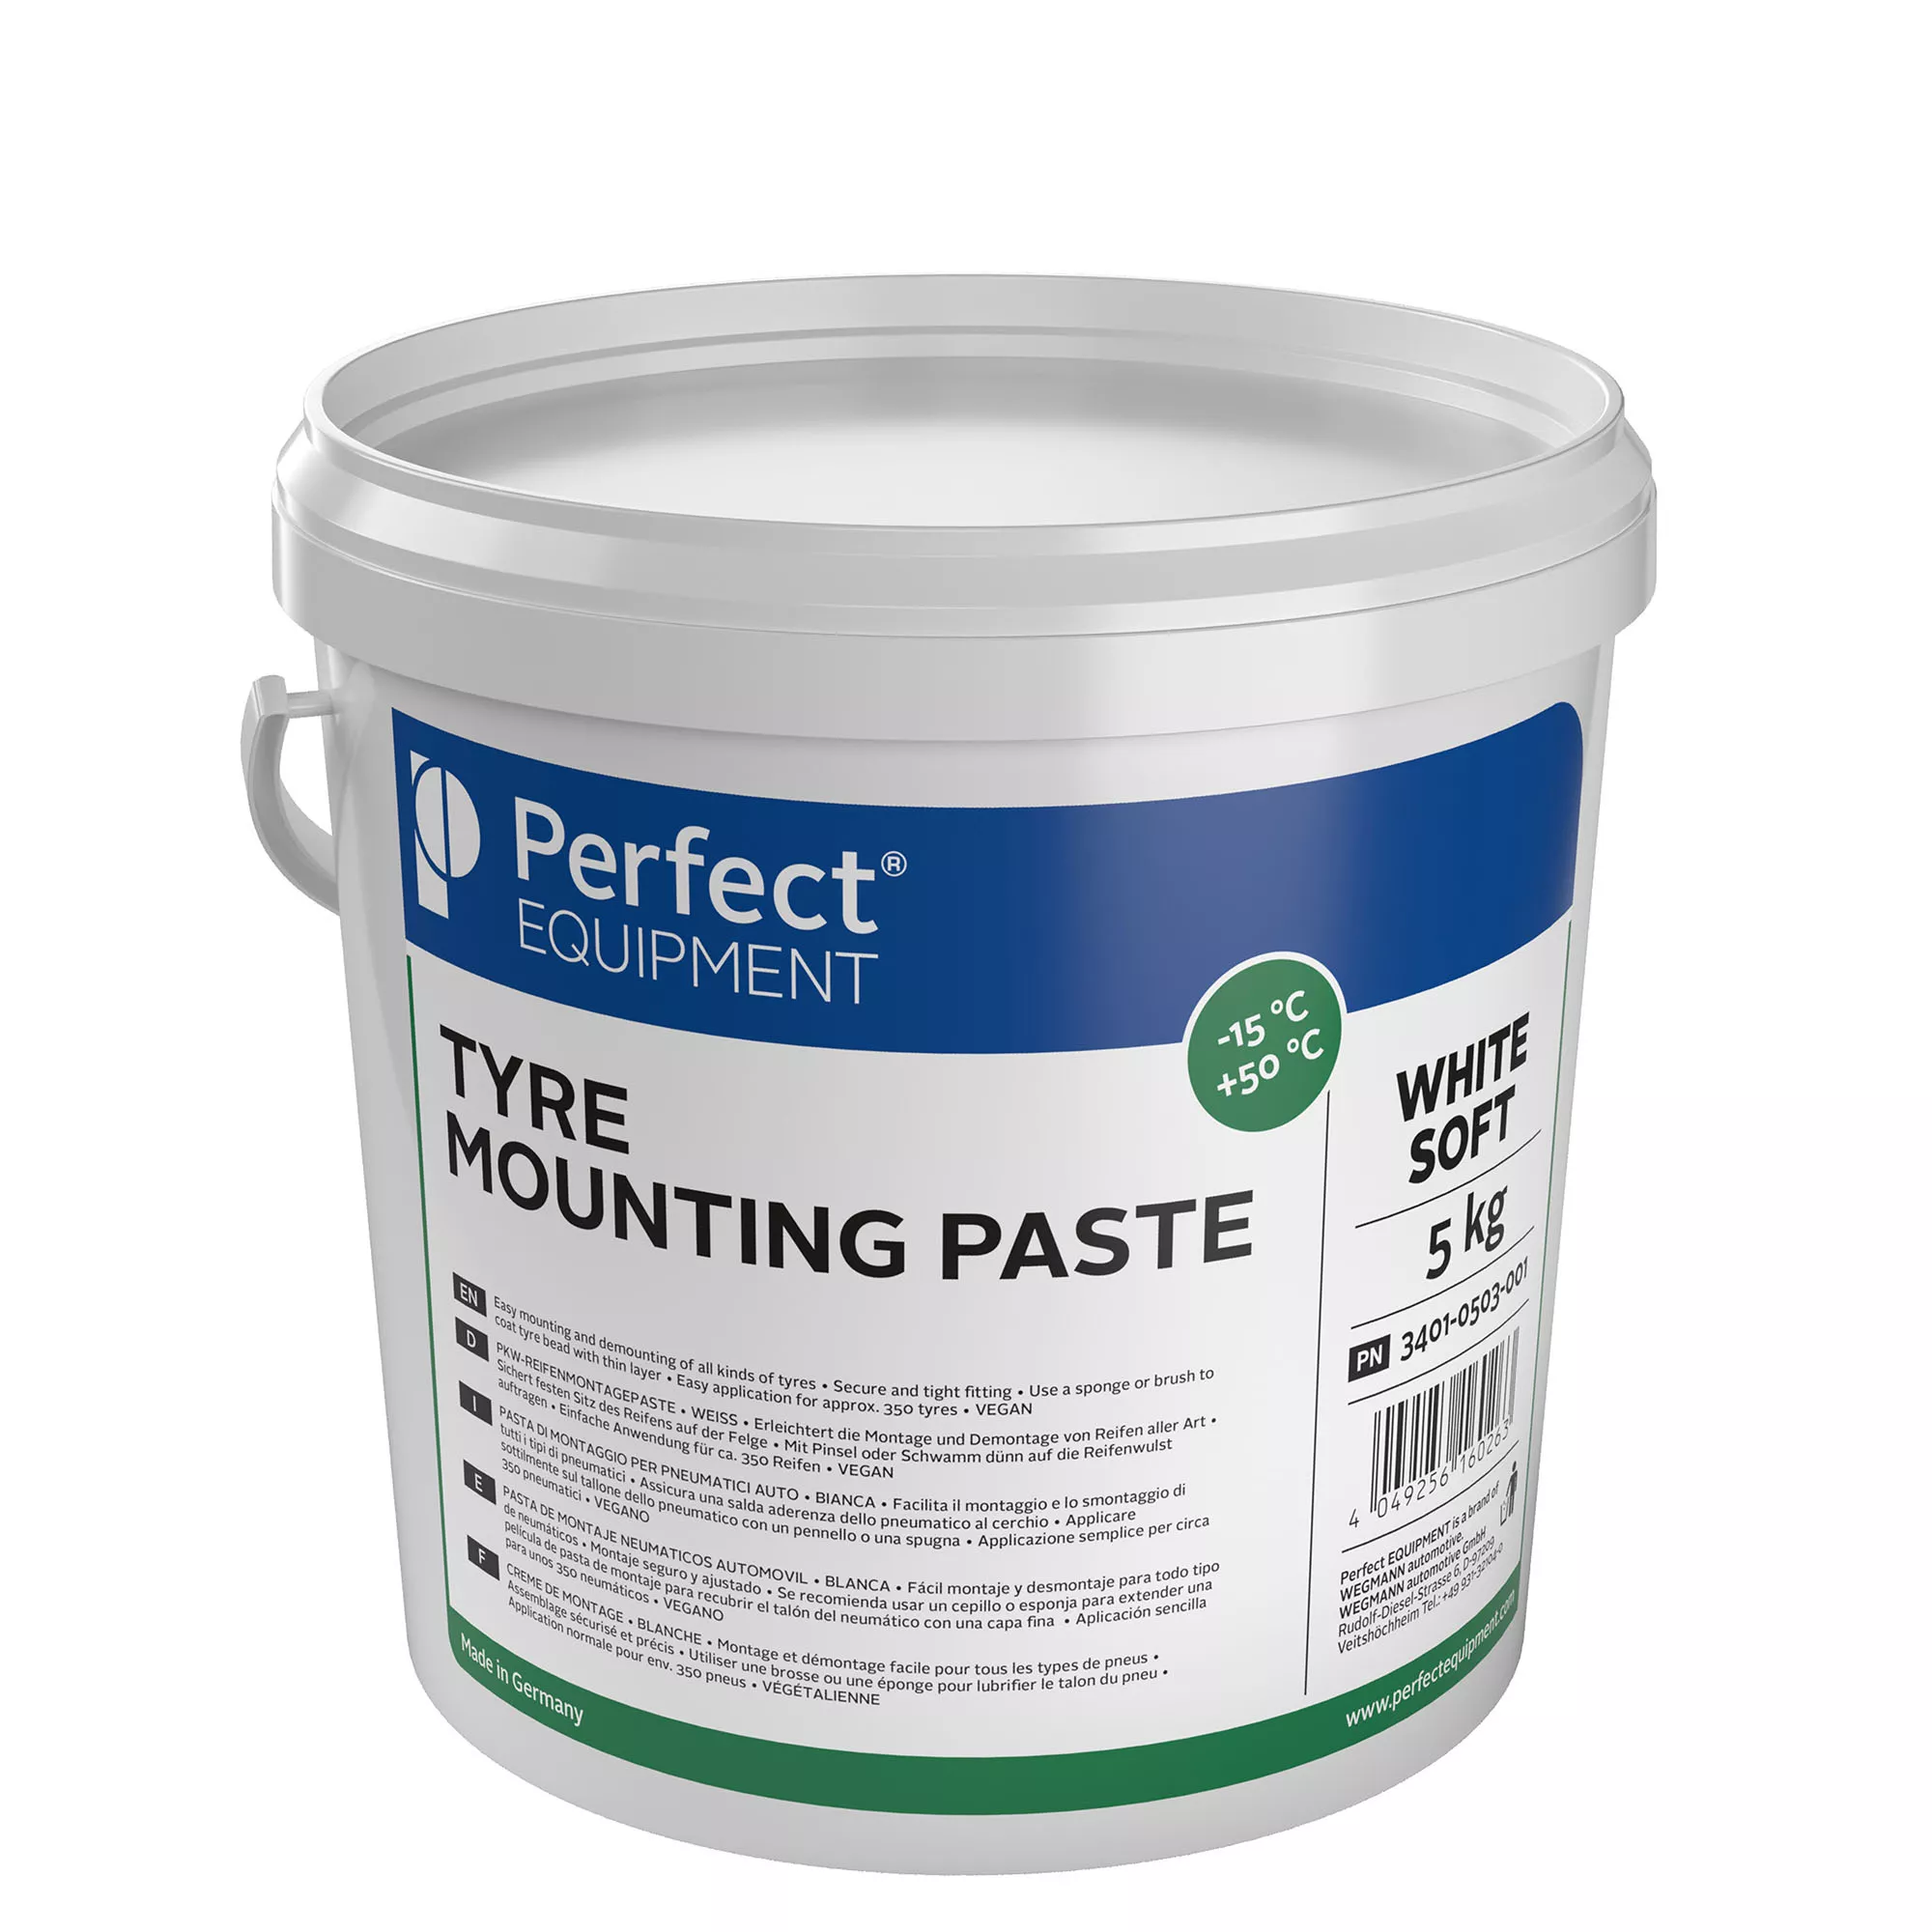 Mounting paste - white, soft, 5kg